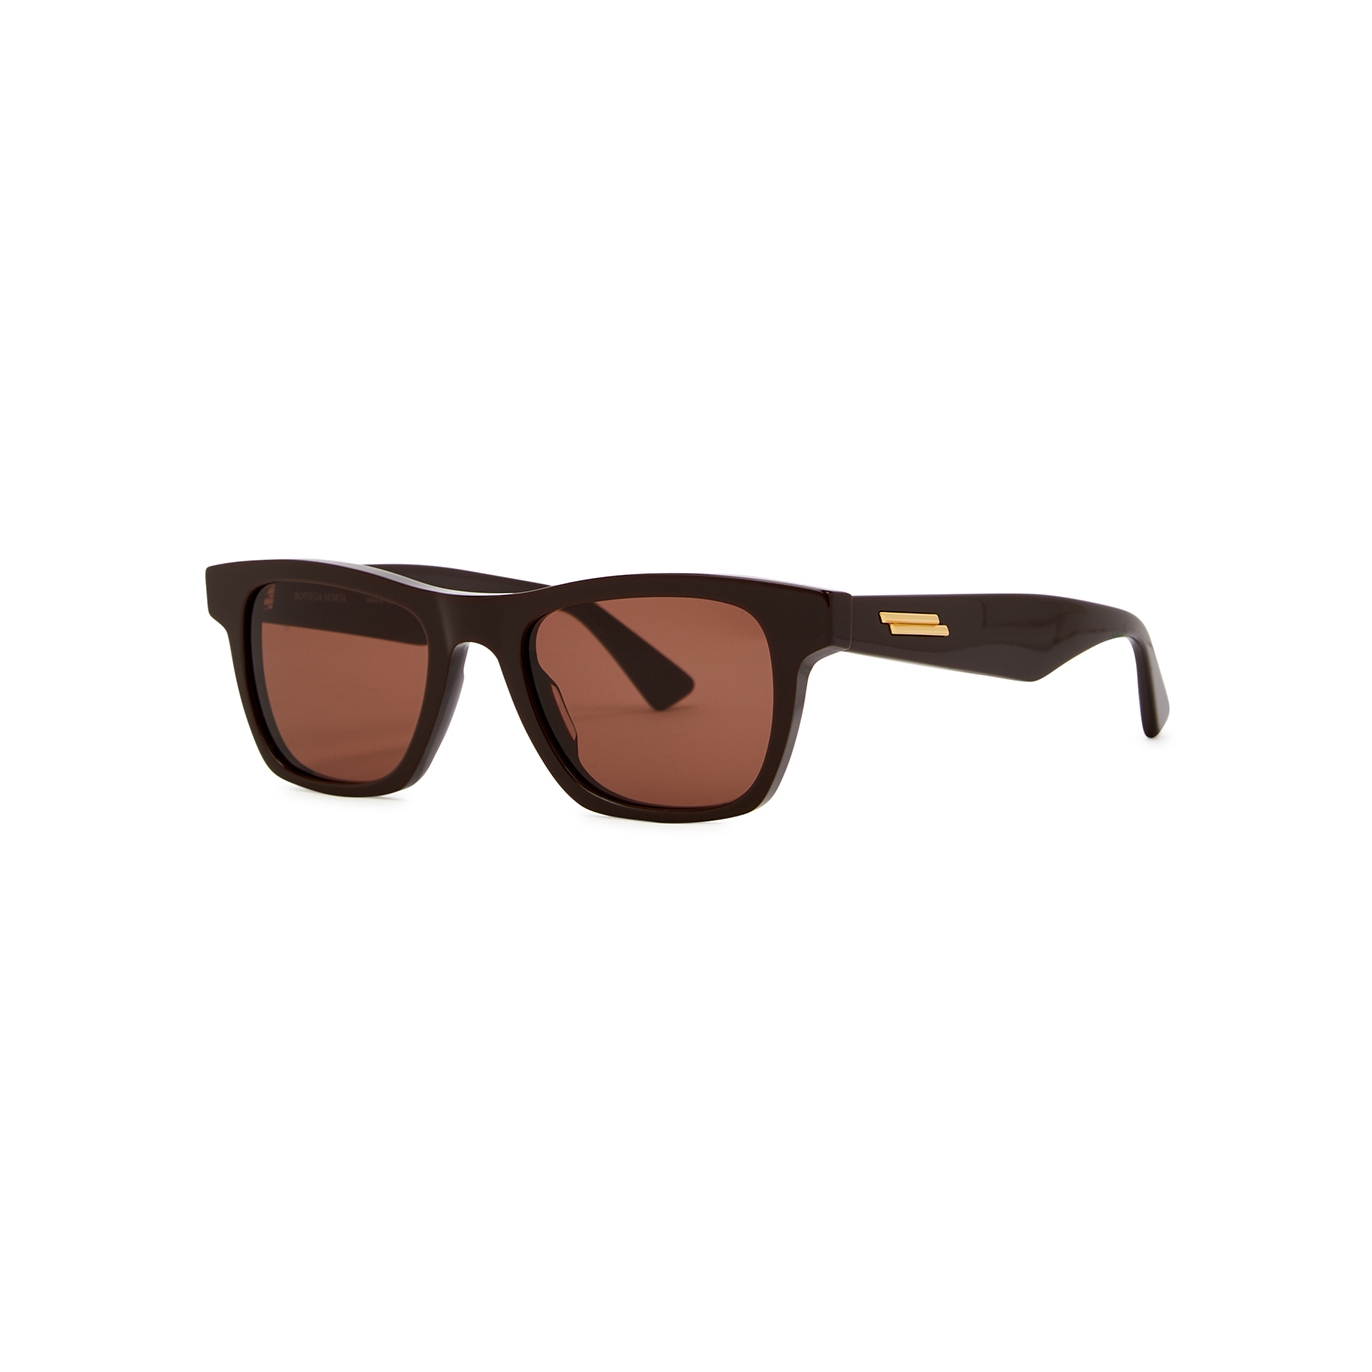 Bottega Veneta New Entry Brown Wayfarer-style Sunglasses